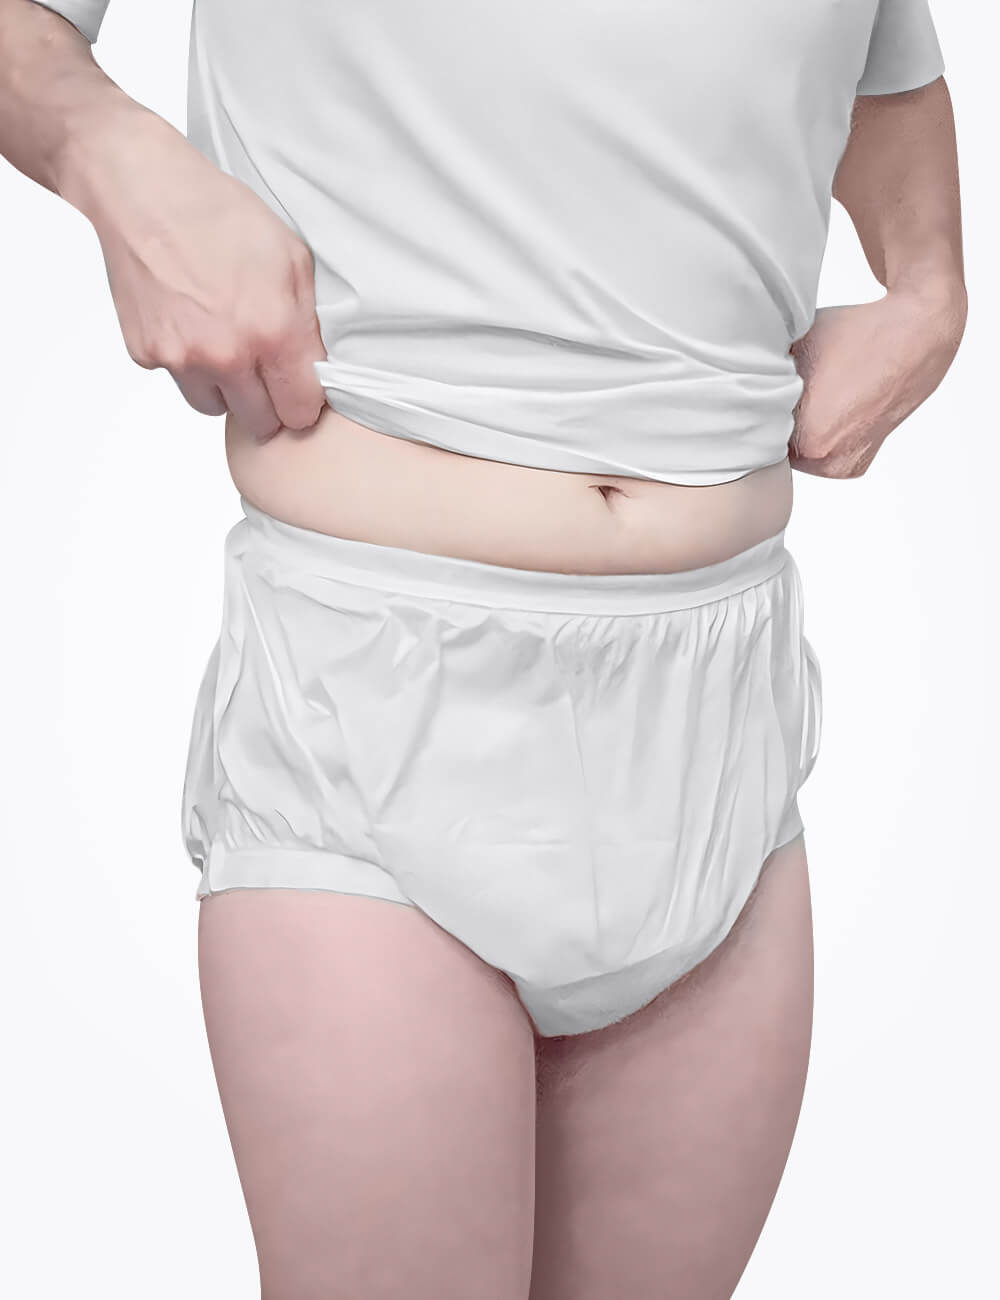 Assured Urine Leak Proof- Incontinence Protective Underwear